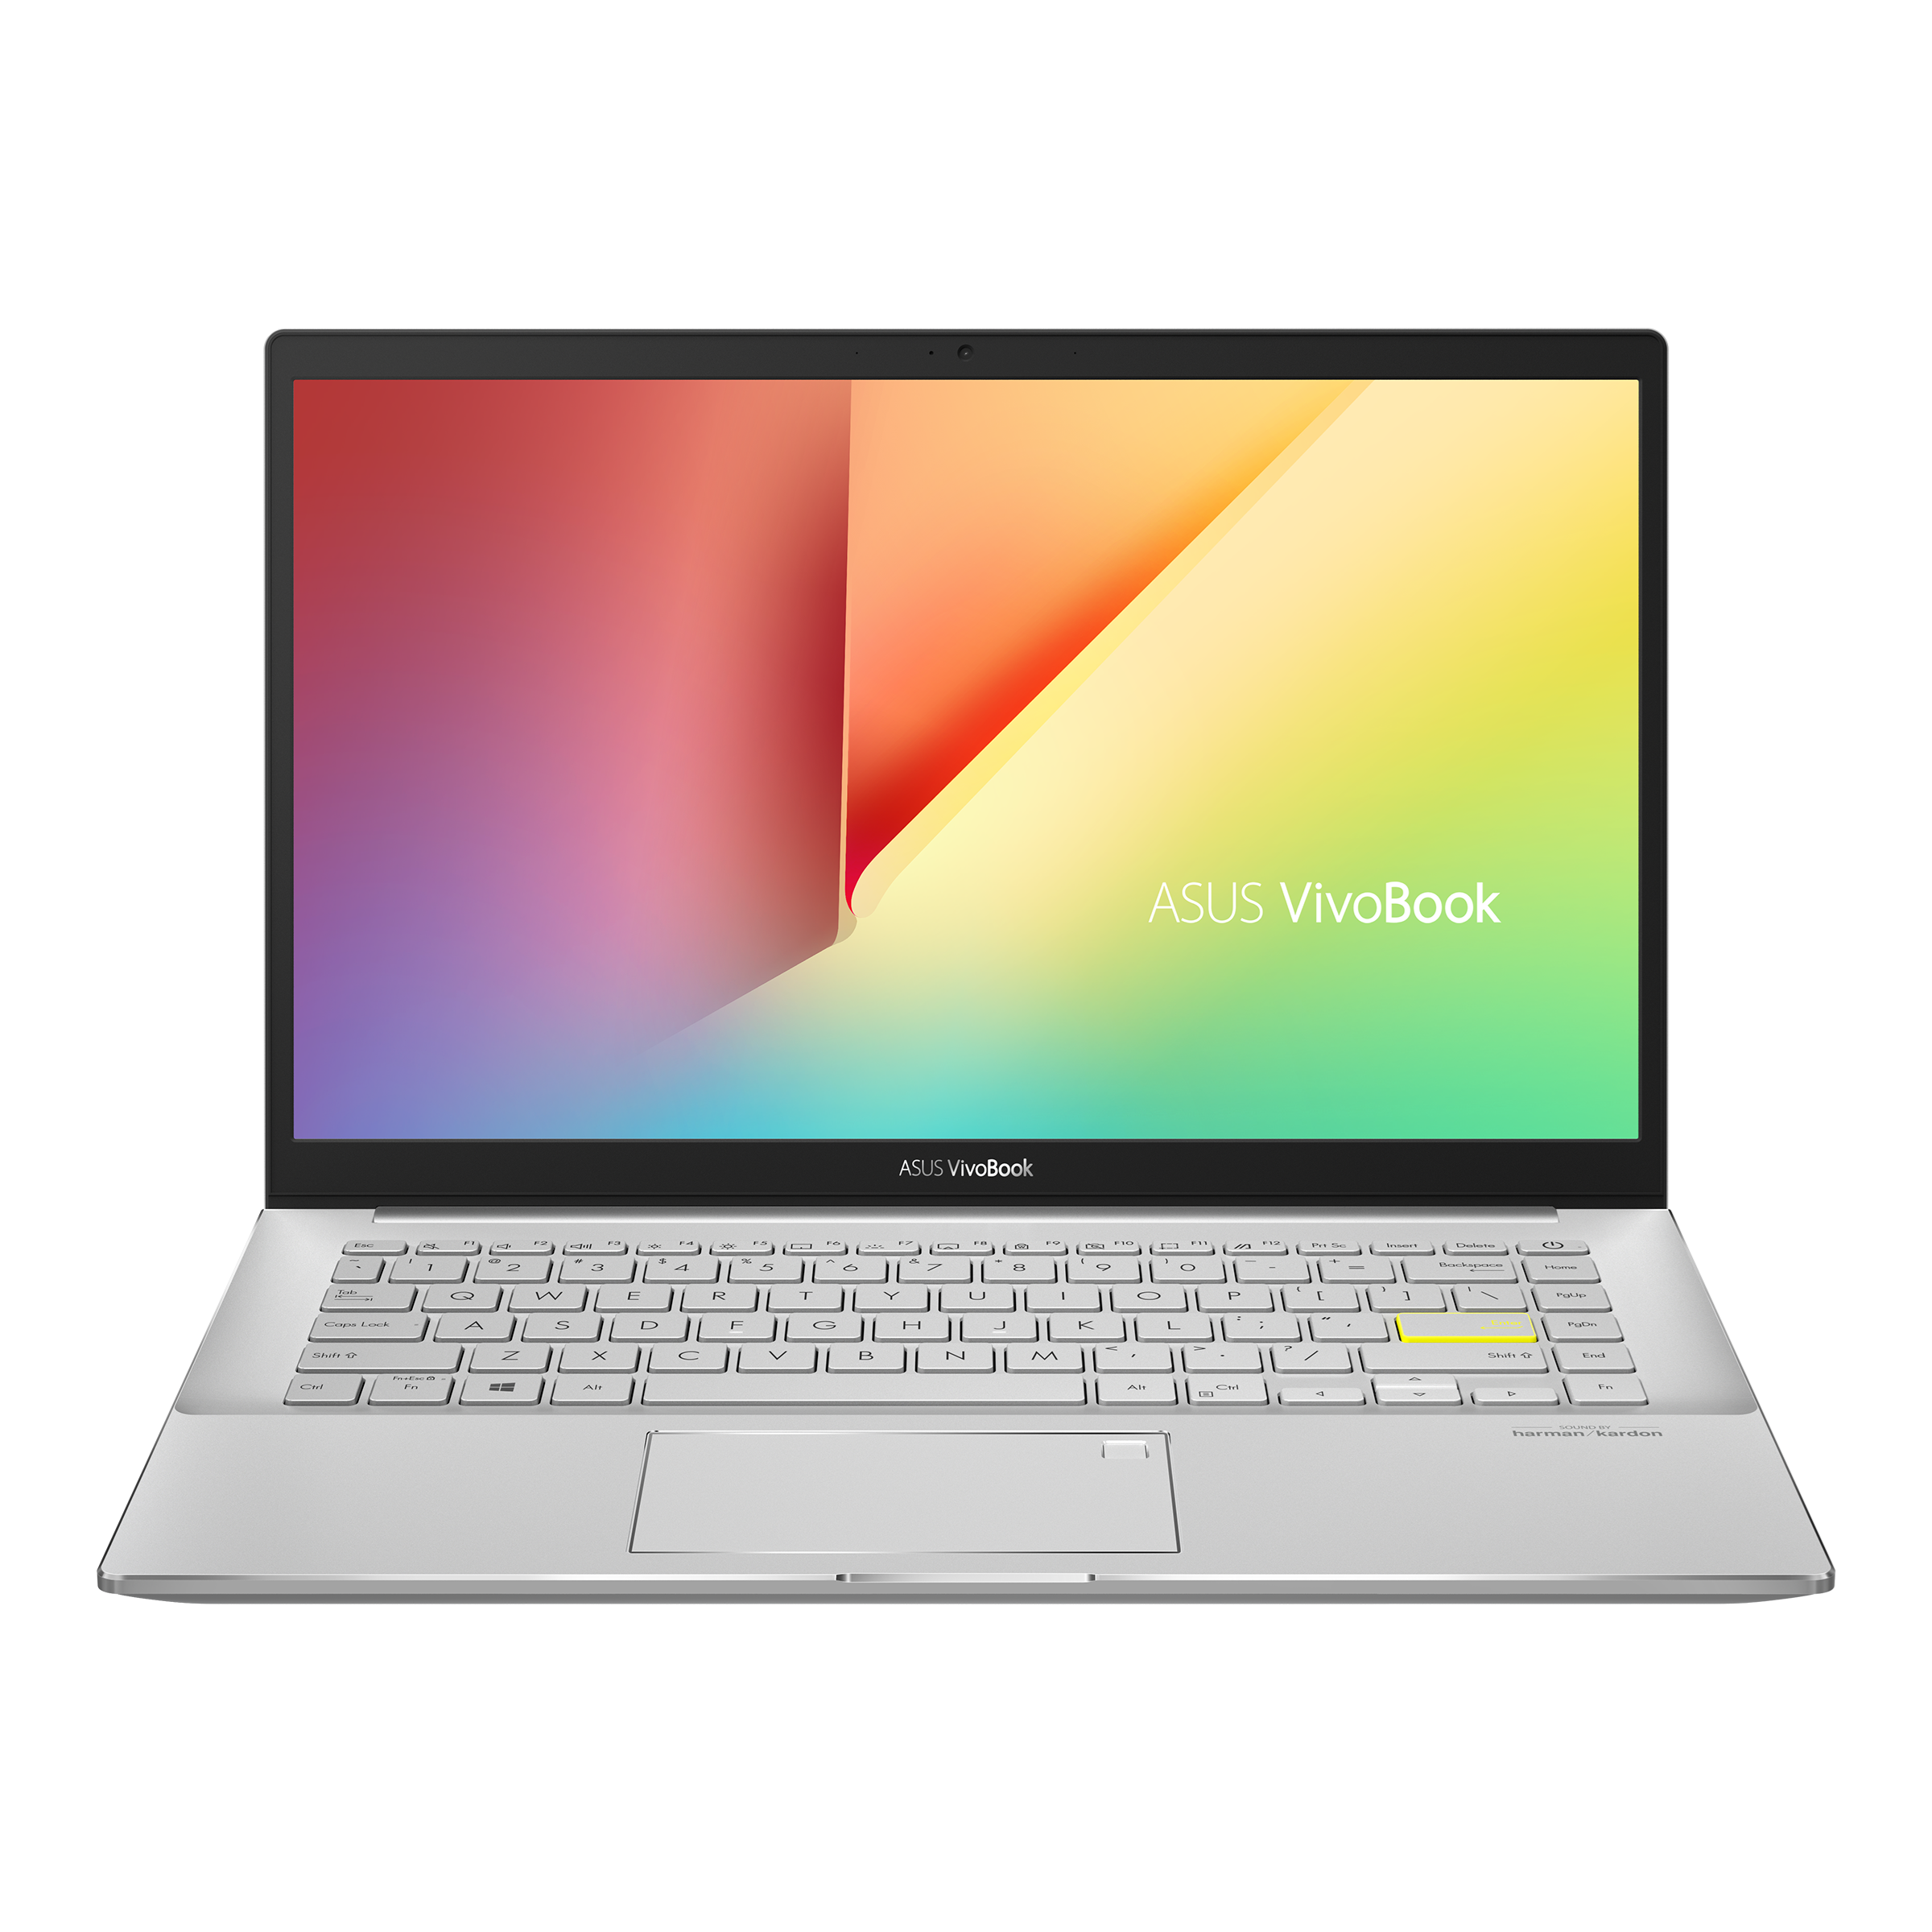 ASUS Vivobook Laptops｜Laptops For Home｜ASUS USA